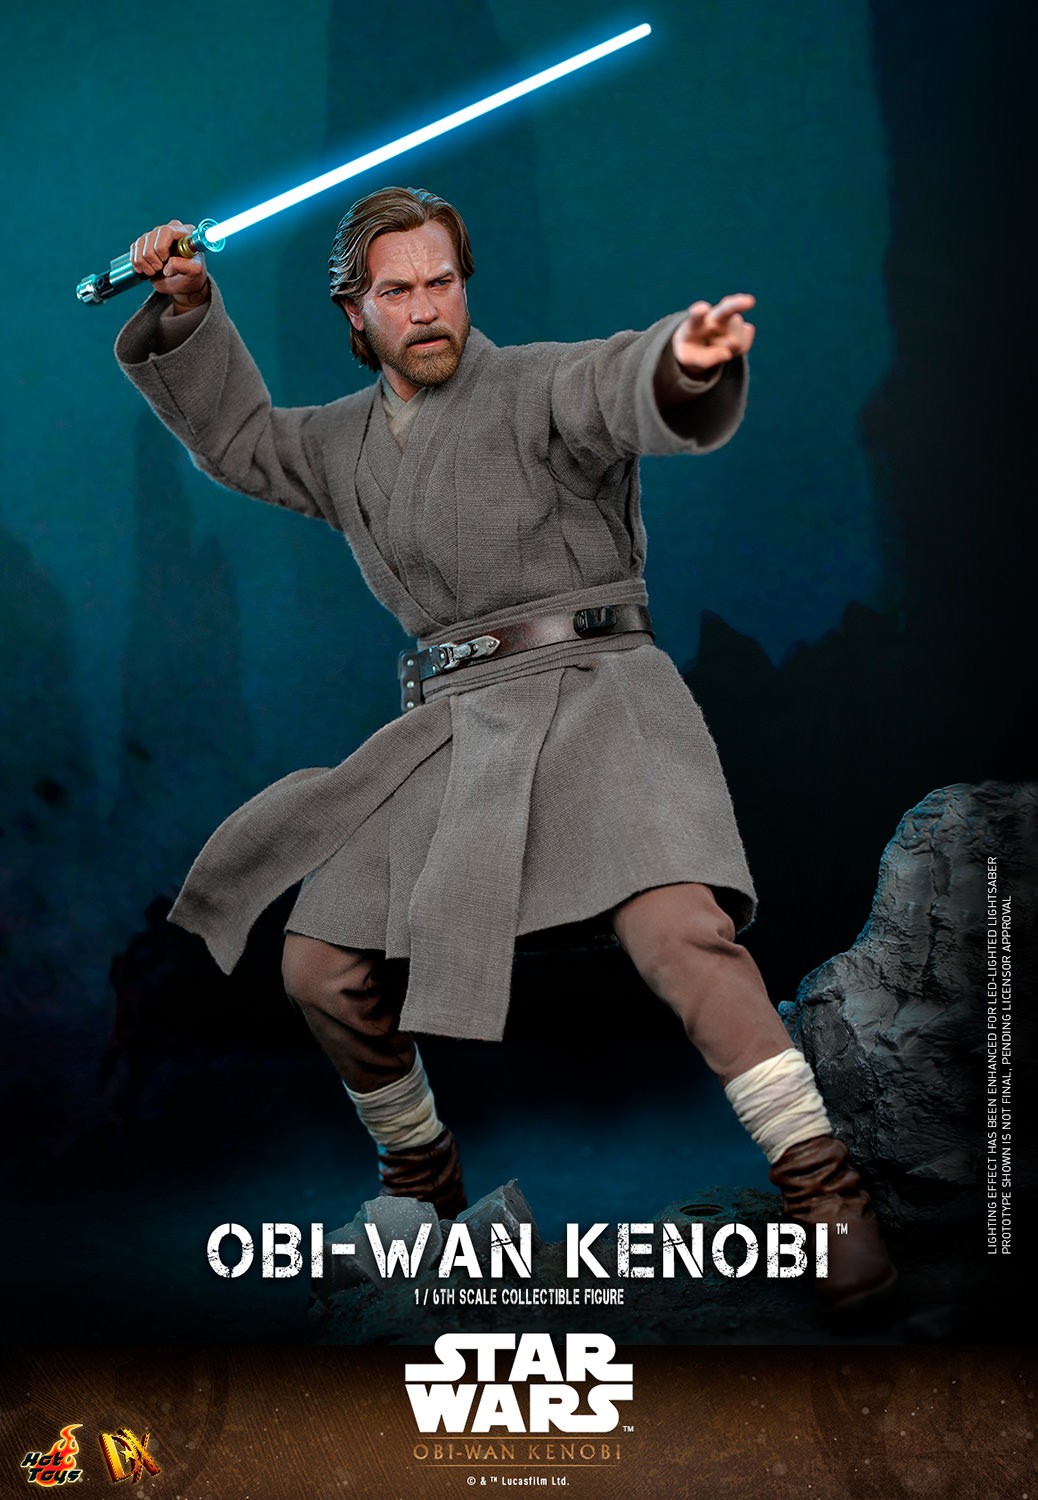 Obi-Wan Kenobi Collector Edition (Prototype Shown) View 10